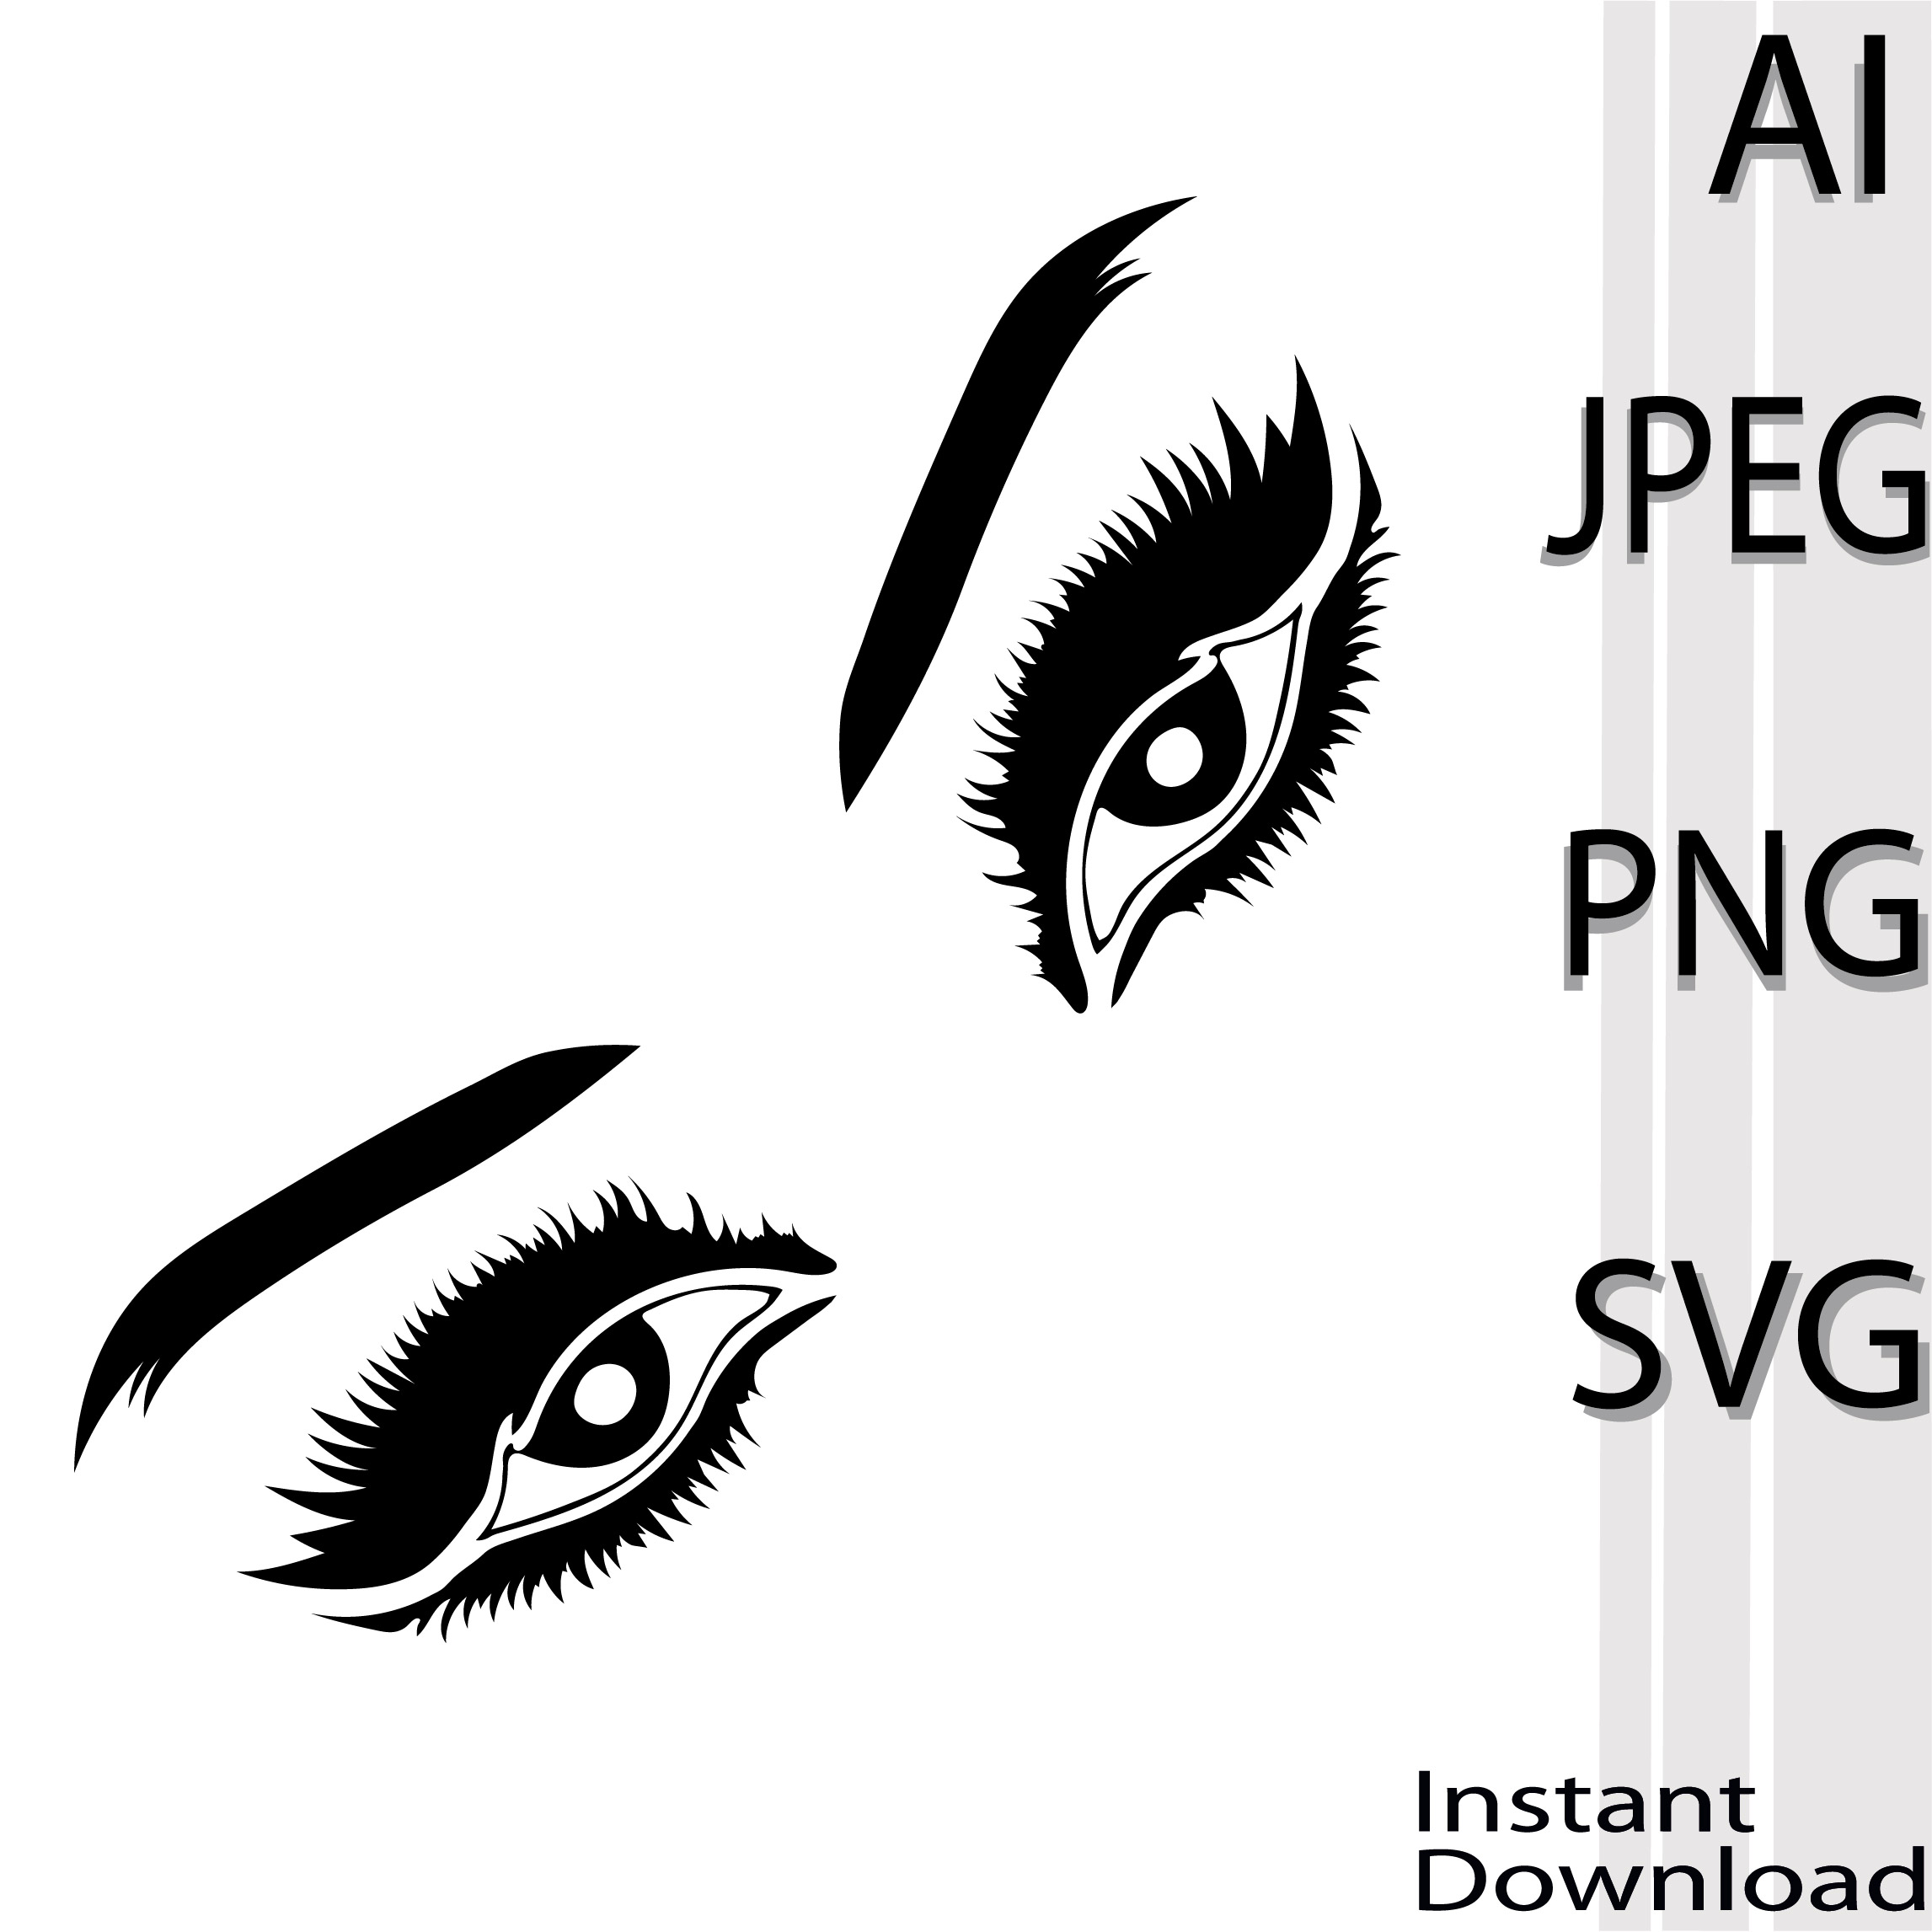 Woman Eyes SVG Design pinterest image.